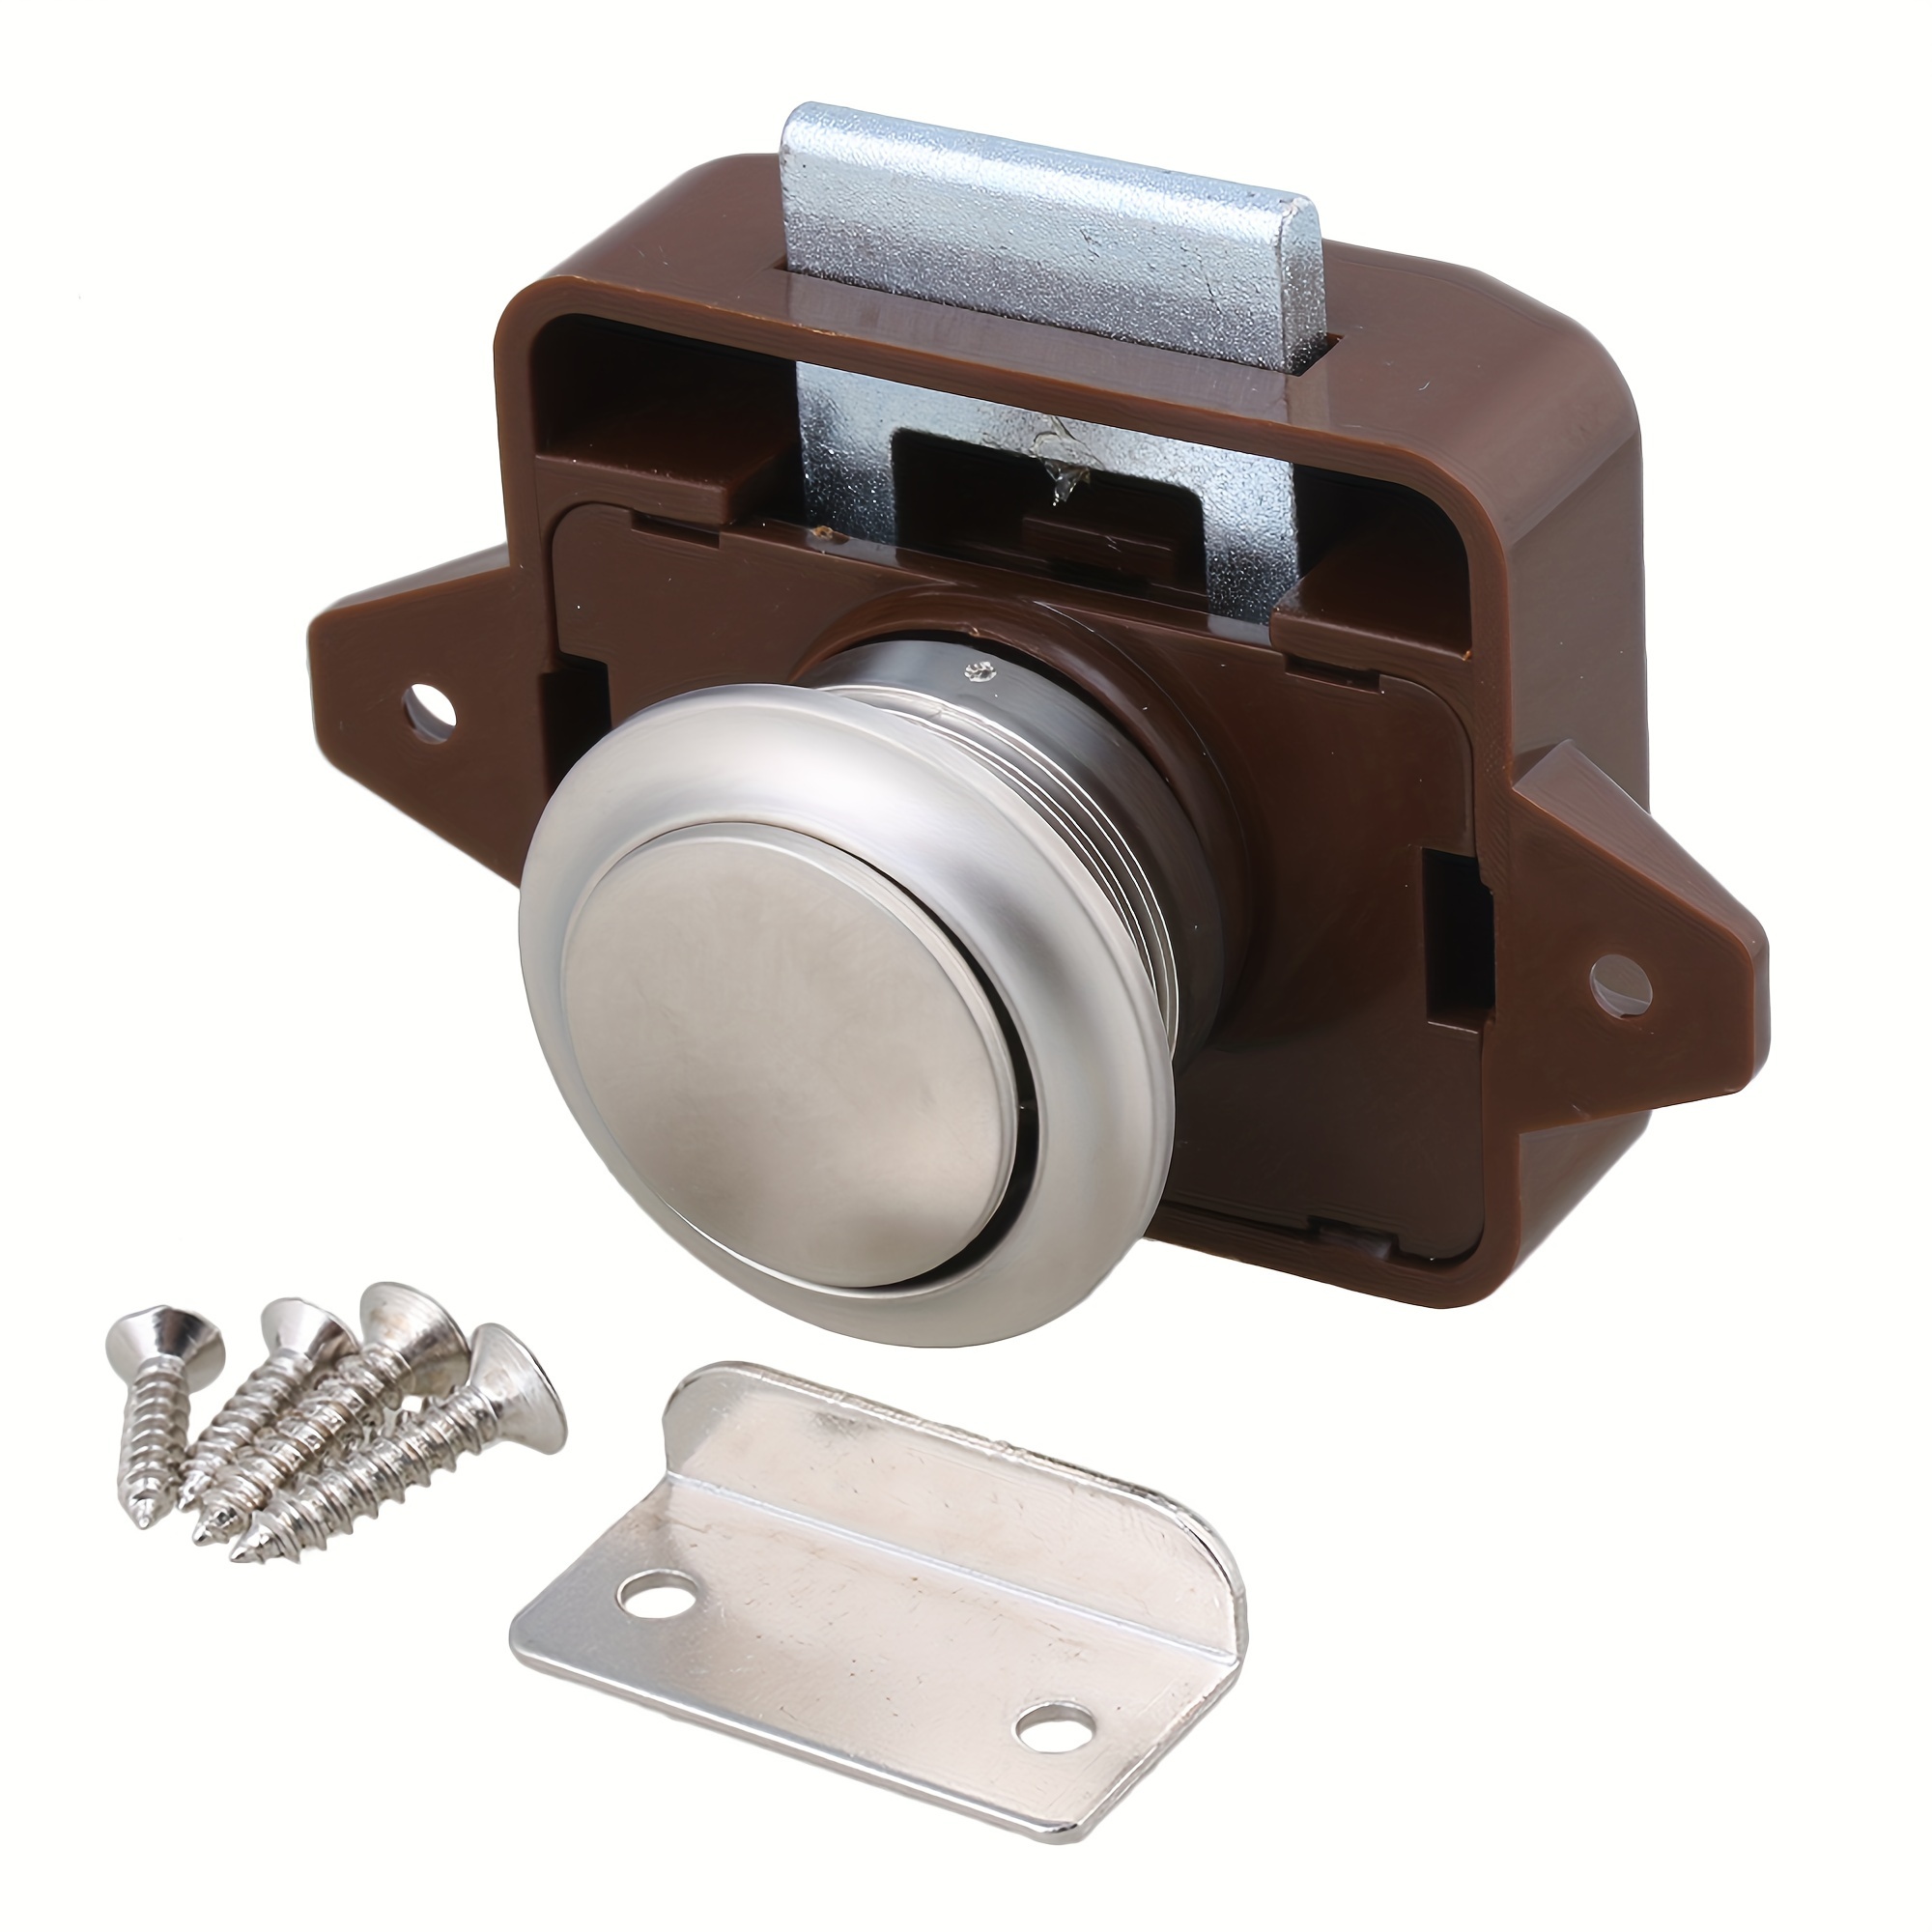 

Brown Car Push Lock Rv Caravan Boat Motor Home Cabinet Drawer Latch Button Locks For Furniture Hardware